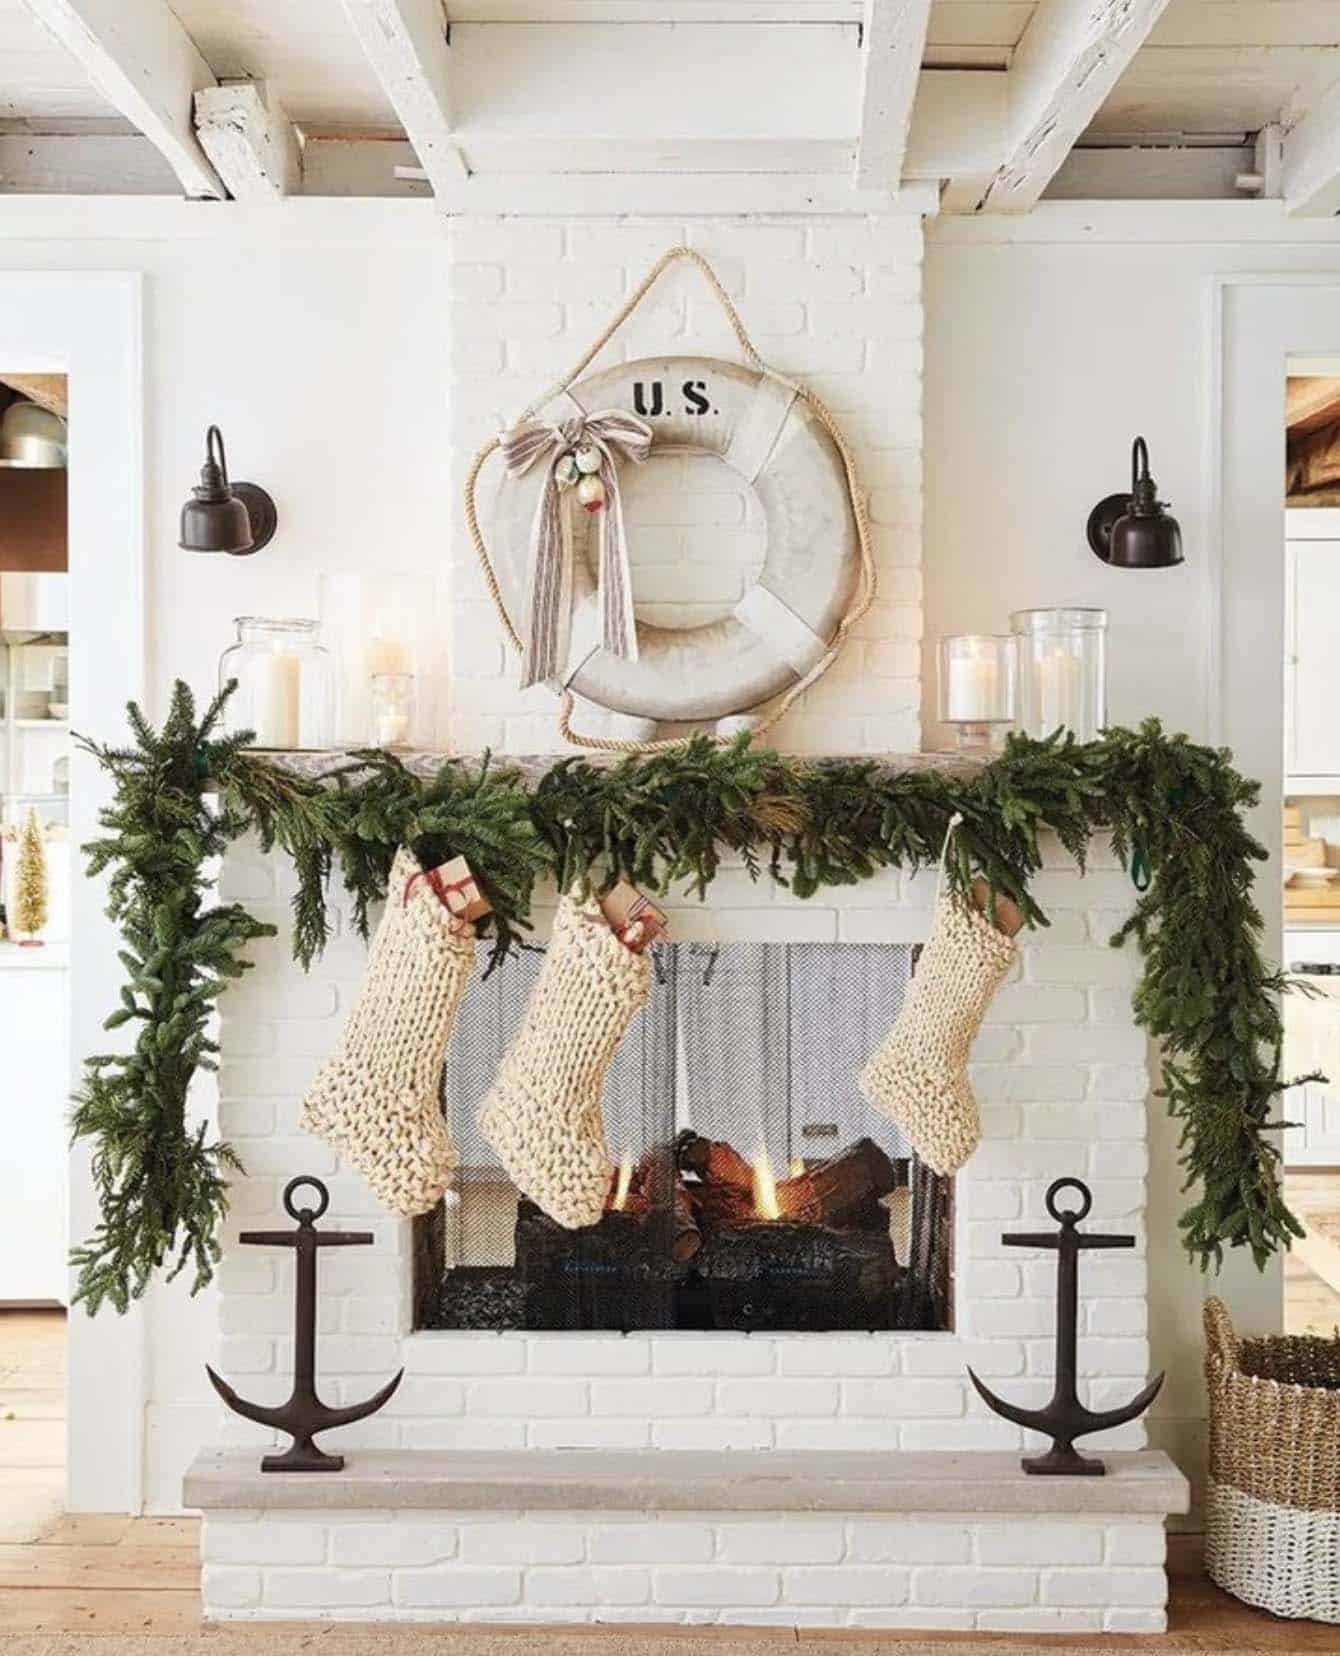 vintage-inspired Christmas decor around the fireplace mantel